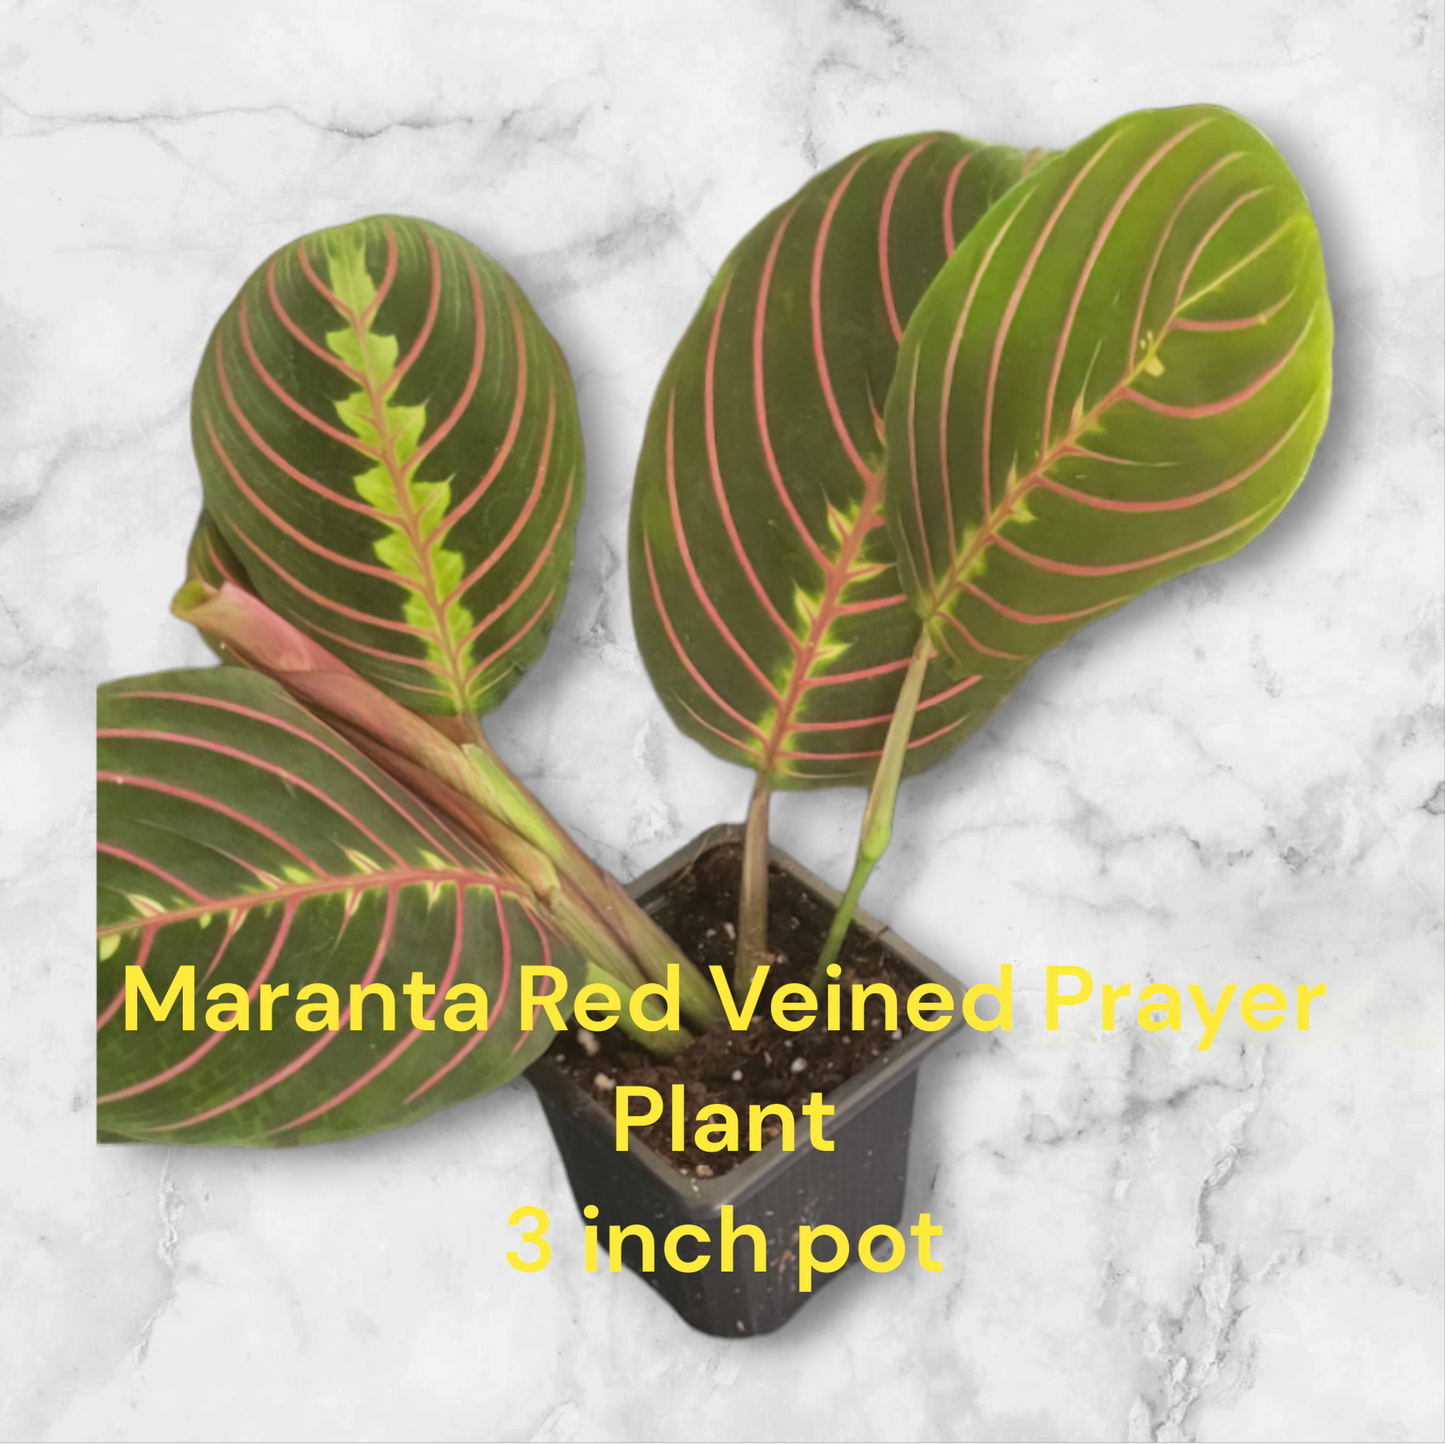 Maranta Leuconeura Erythroneura Red Prayer Plant in 3 inch pot